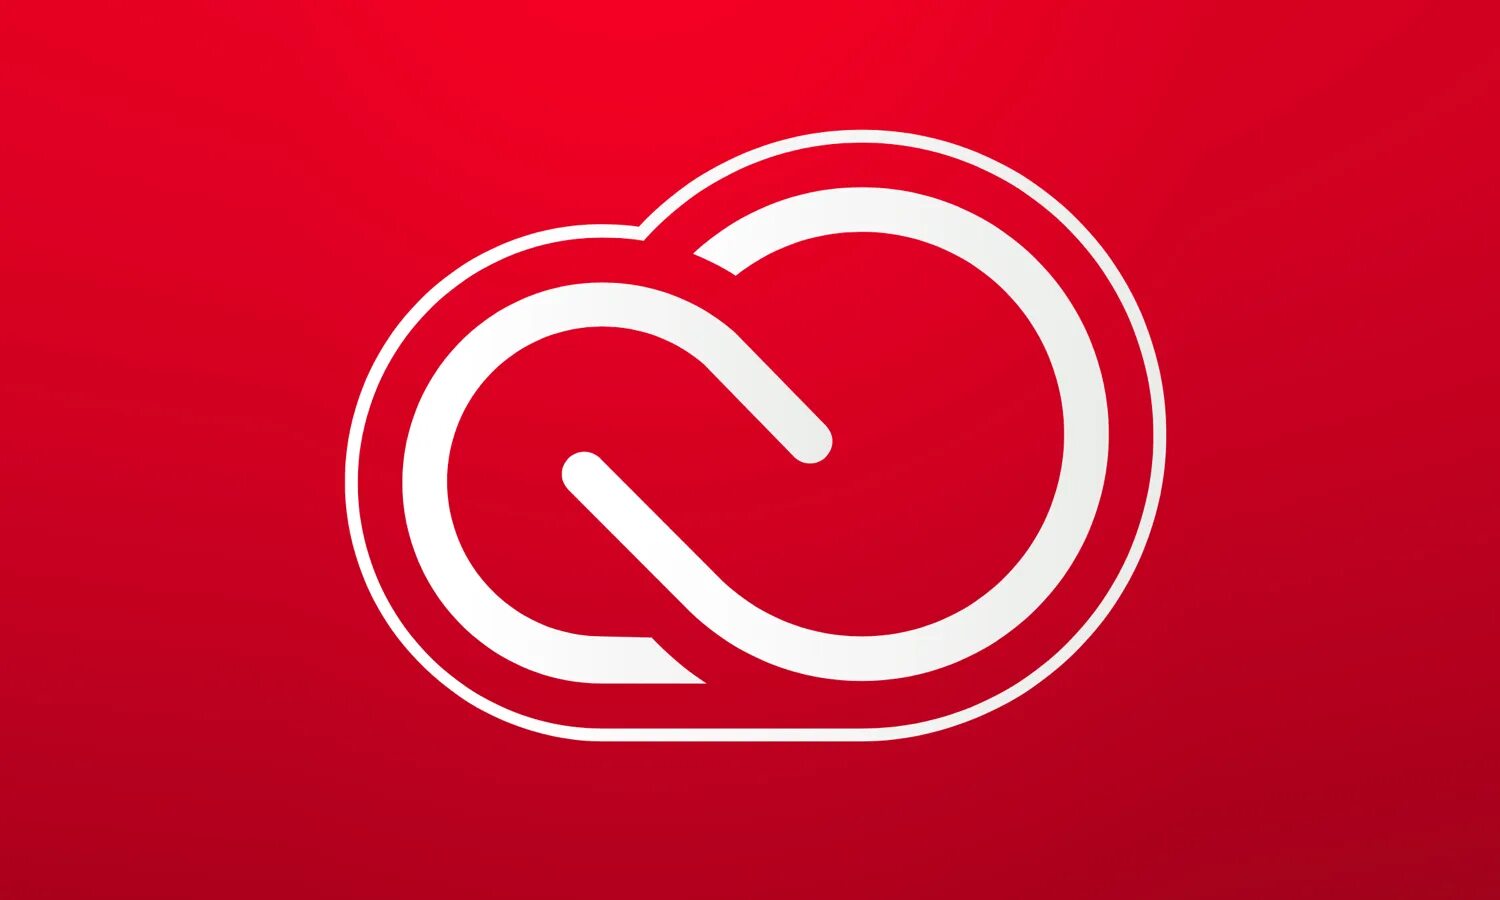 Adobe creative download. Adobe Creative cloud. Adobe Creative cloud logo. Adobe Creative cloud Express лого. Адоб Creative cloud.